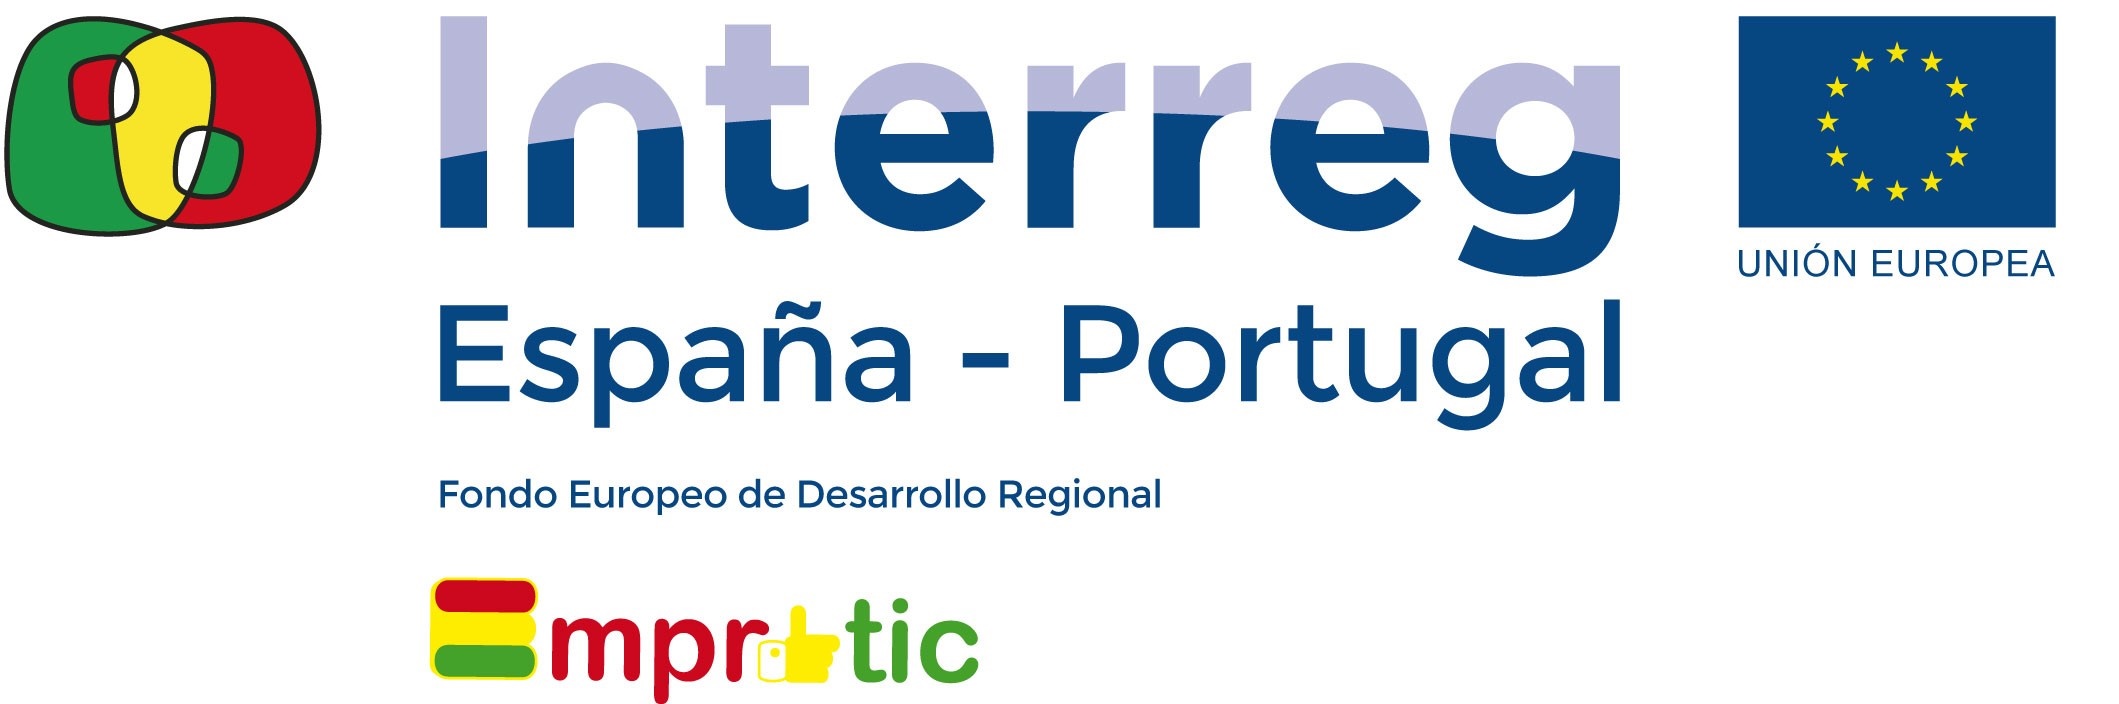 Logo proyecto empretic